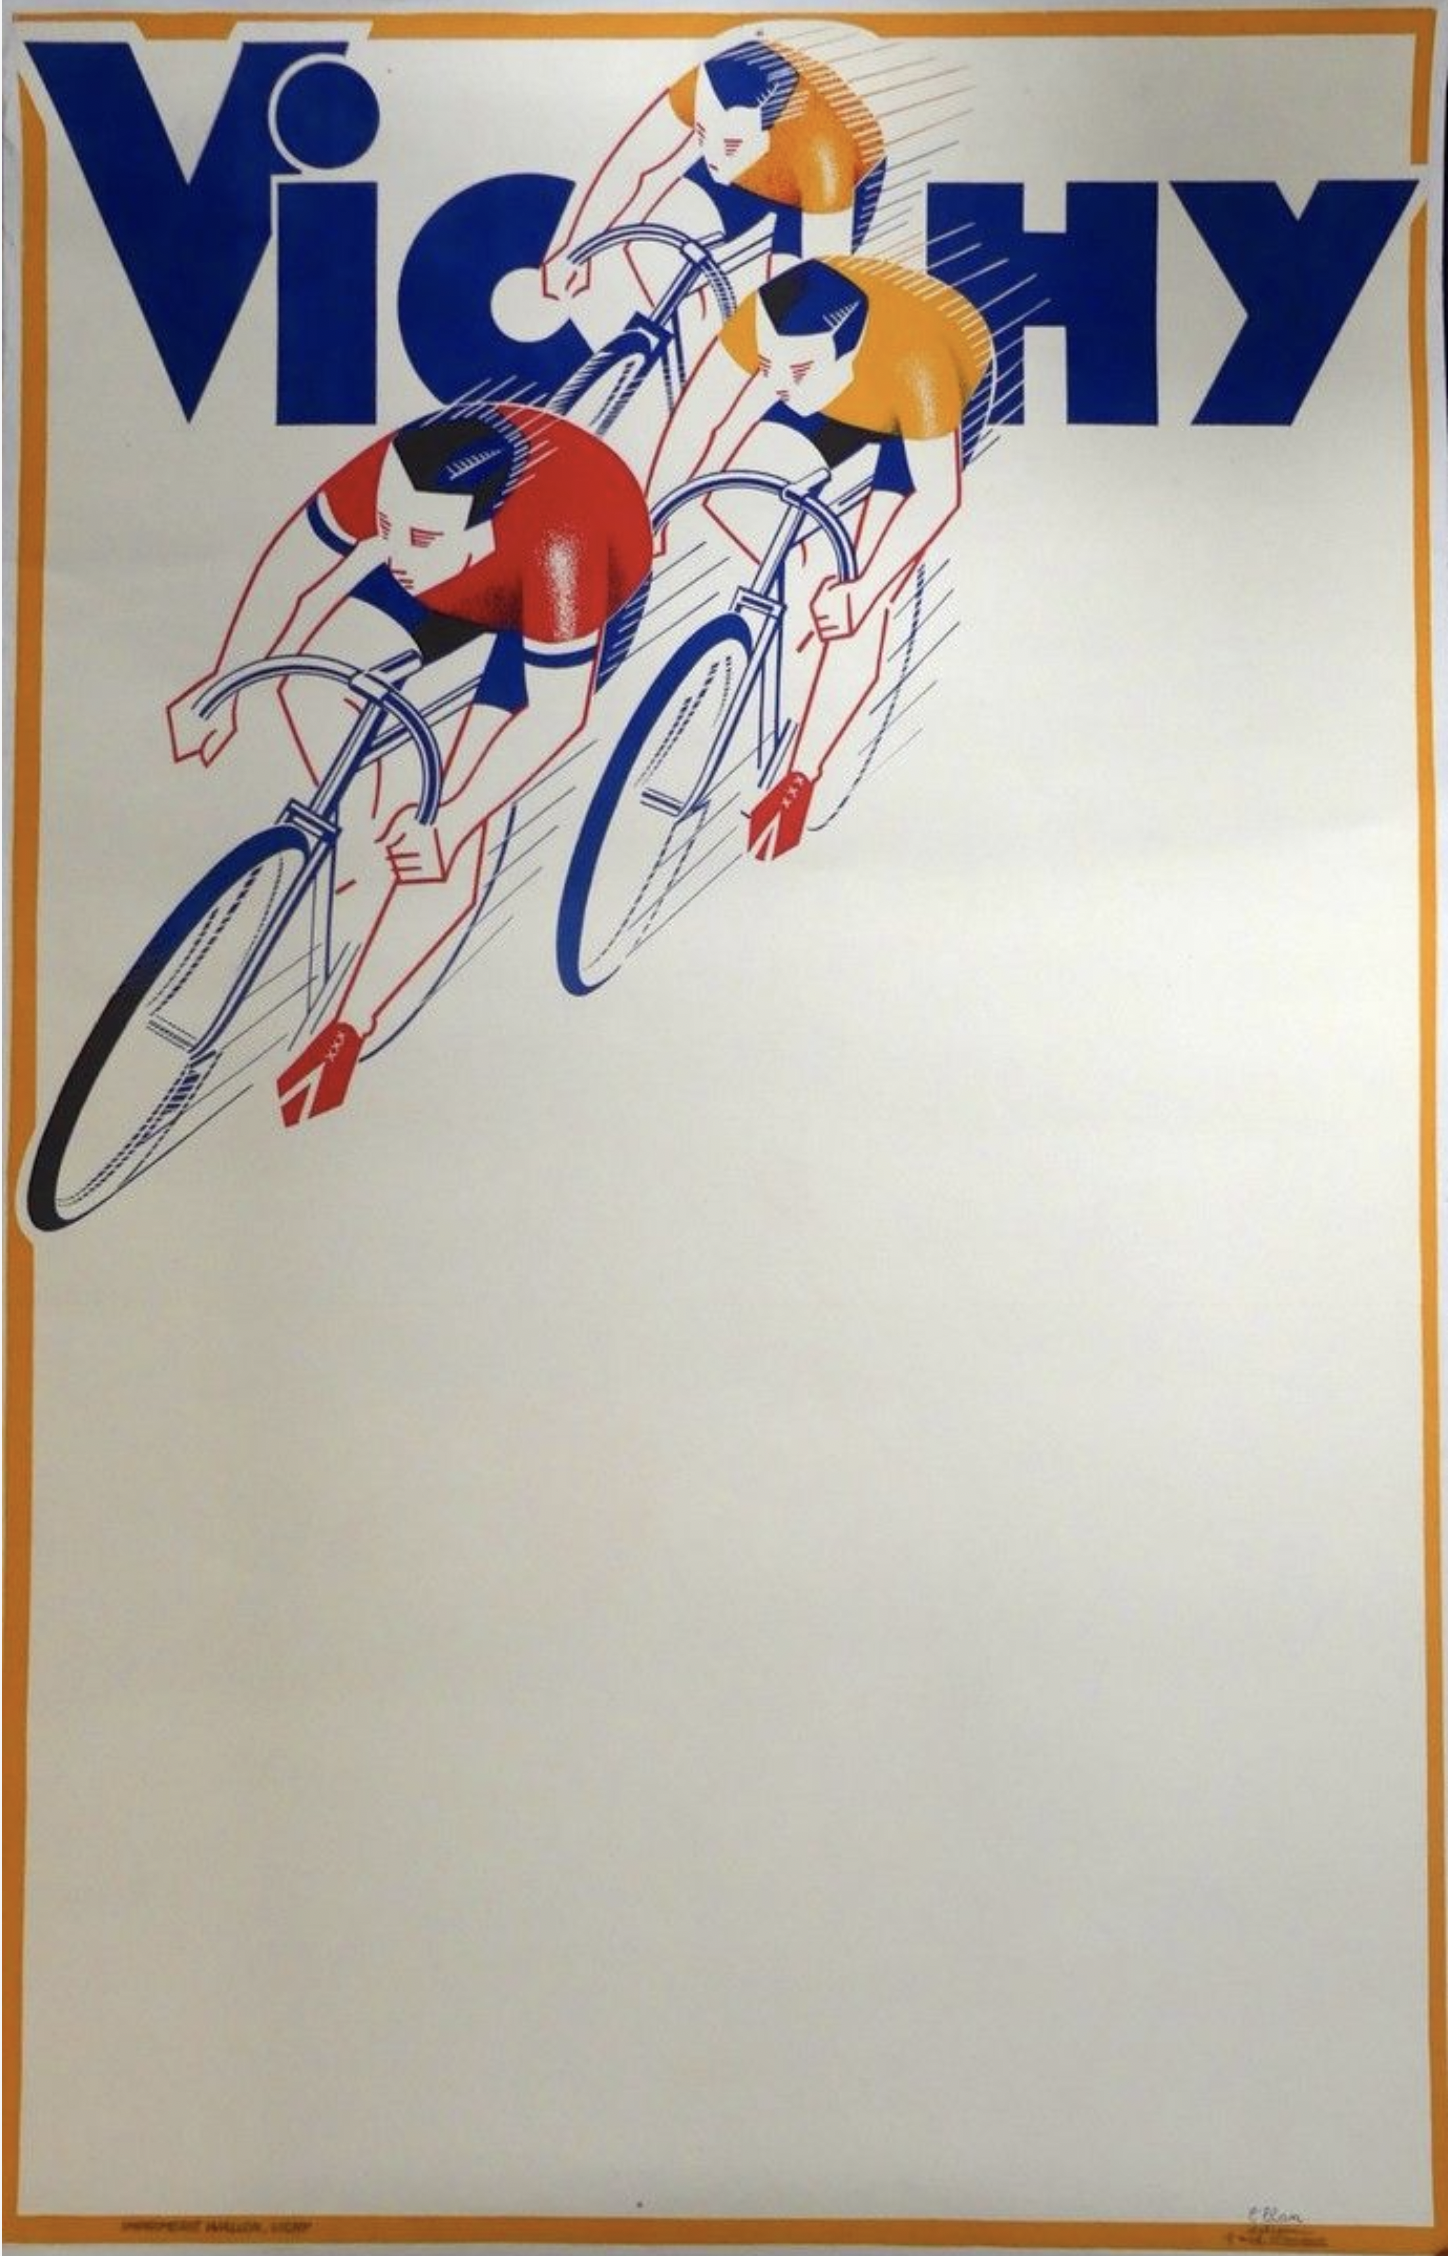 VICHY CYCLE Original Vintage Poster Letitia Morris Gallery